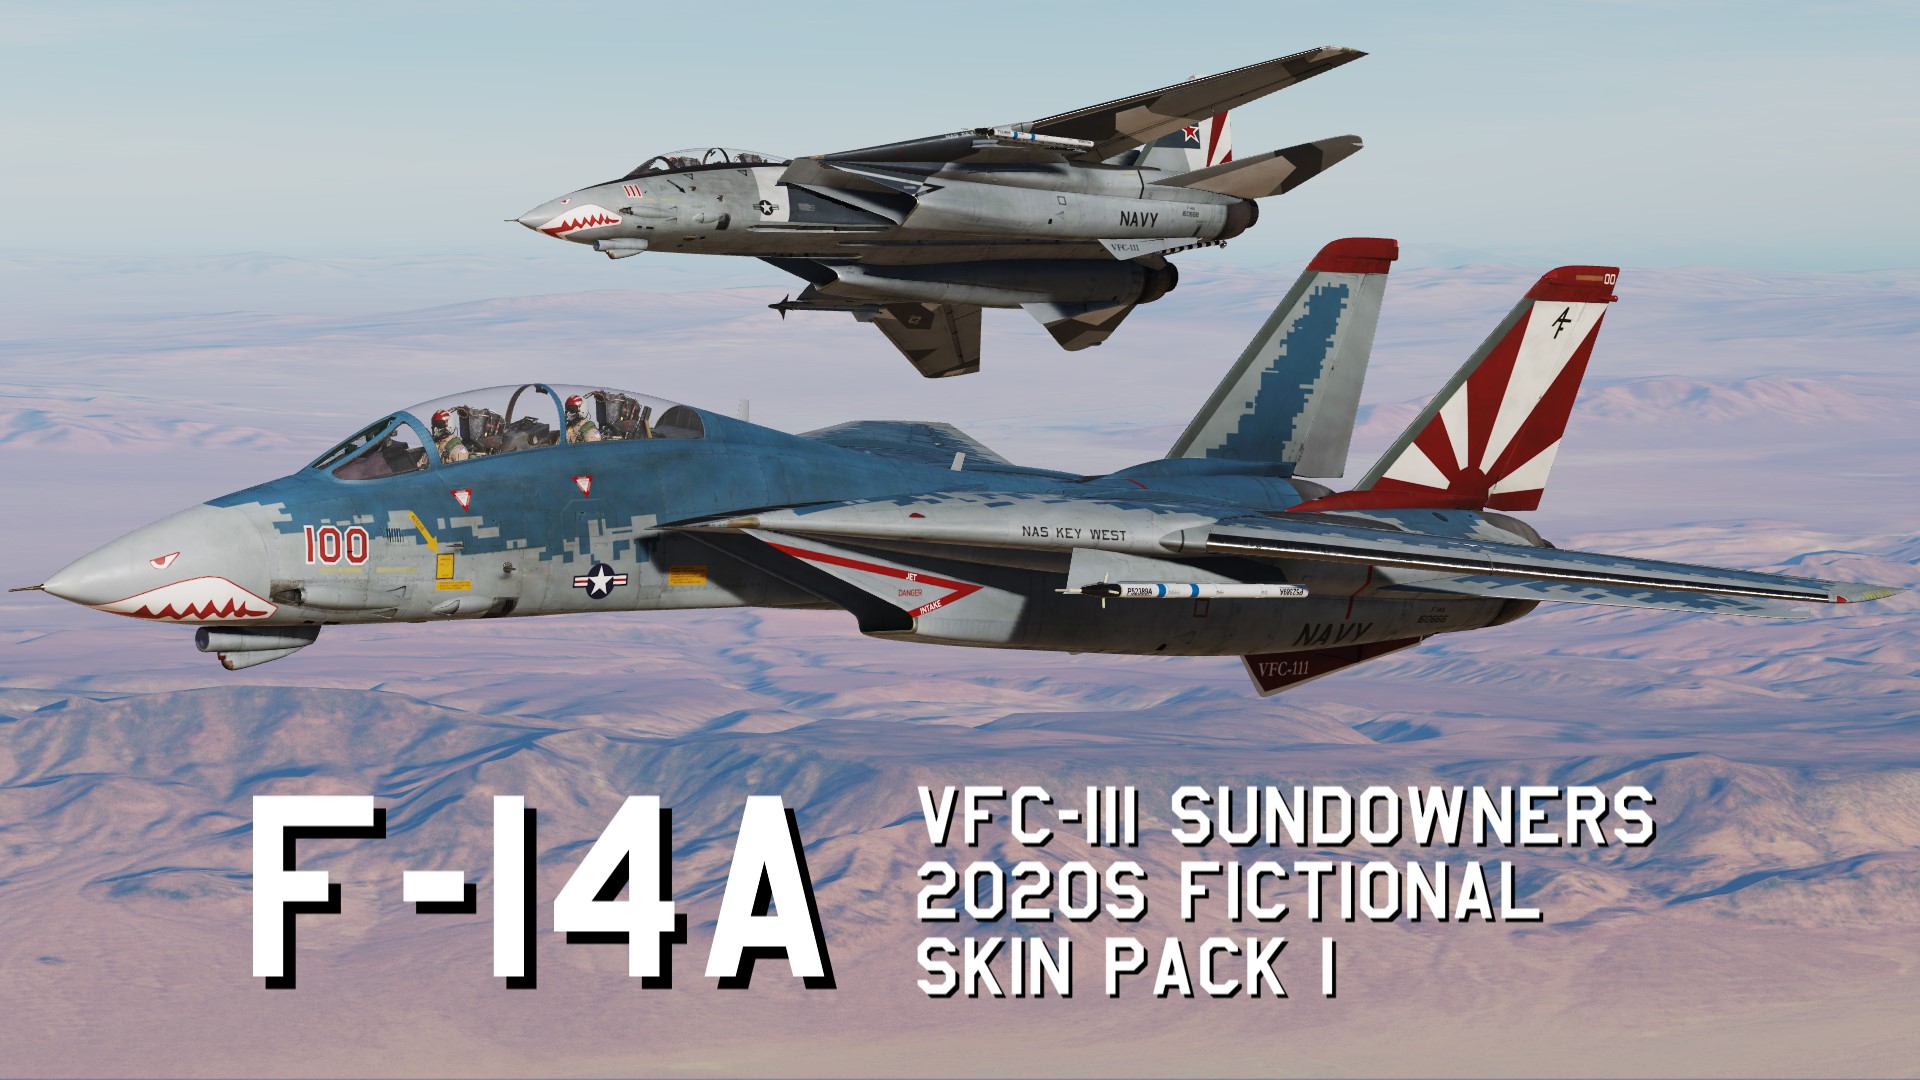 F-14A VFC-111 Sundowners 2020s fictional Skin Pack 1